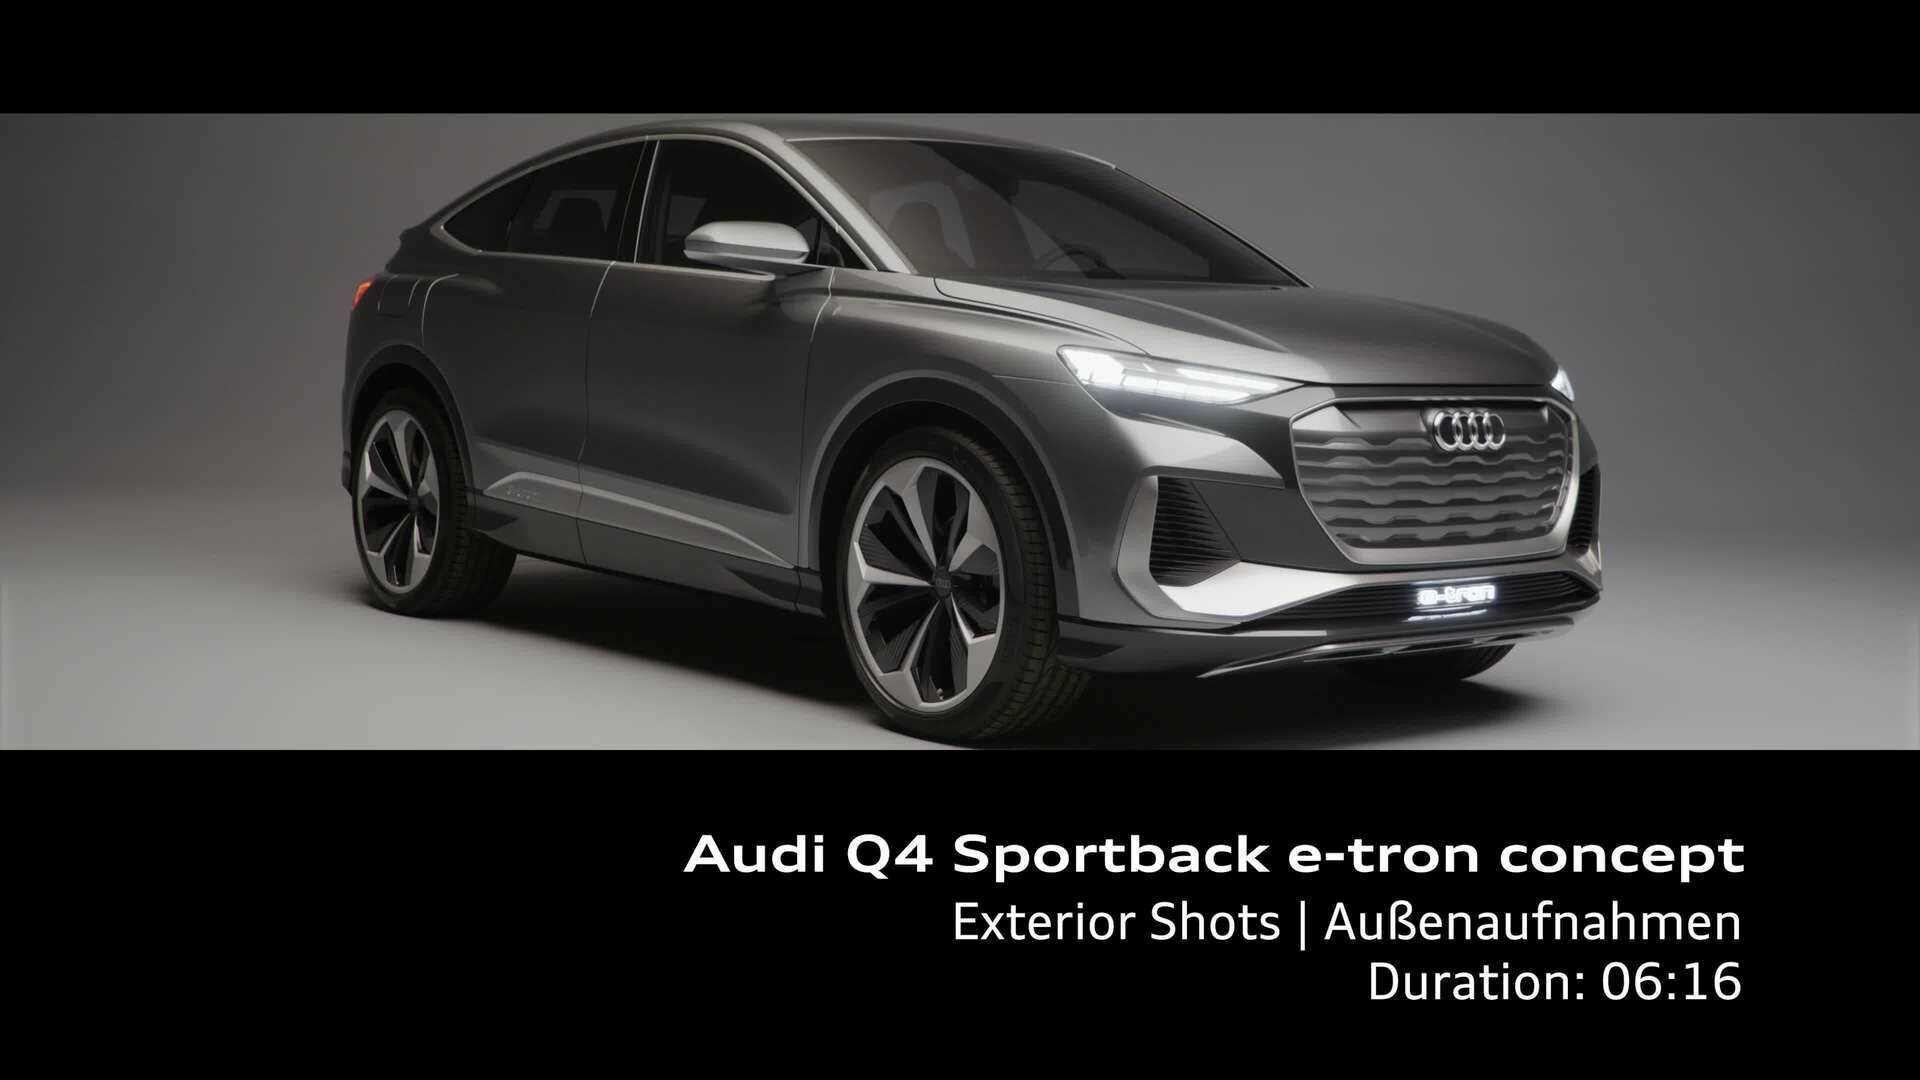 Footage: Audi Q4 Sportback e-tron concept im Studio